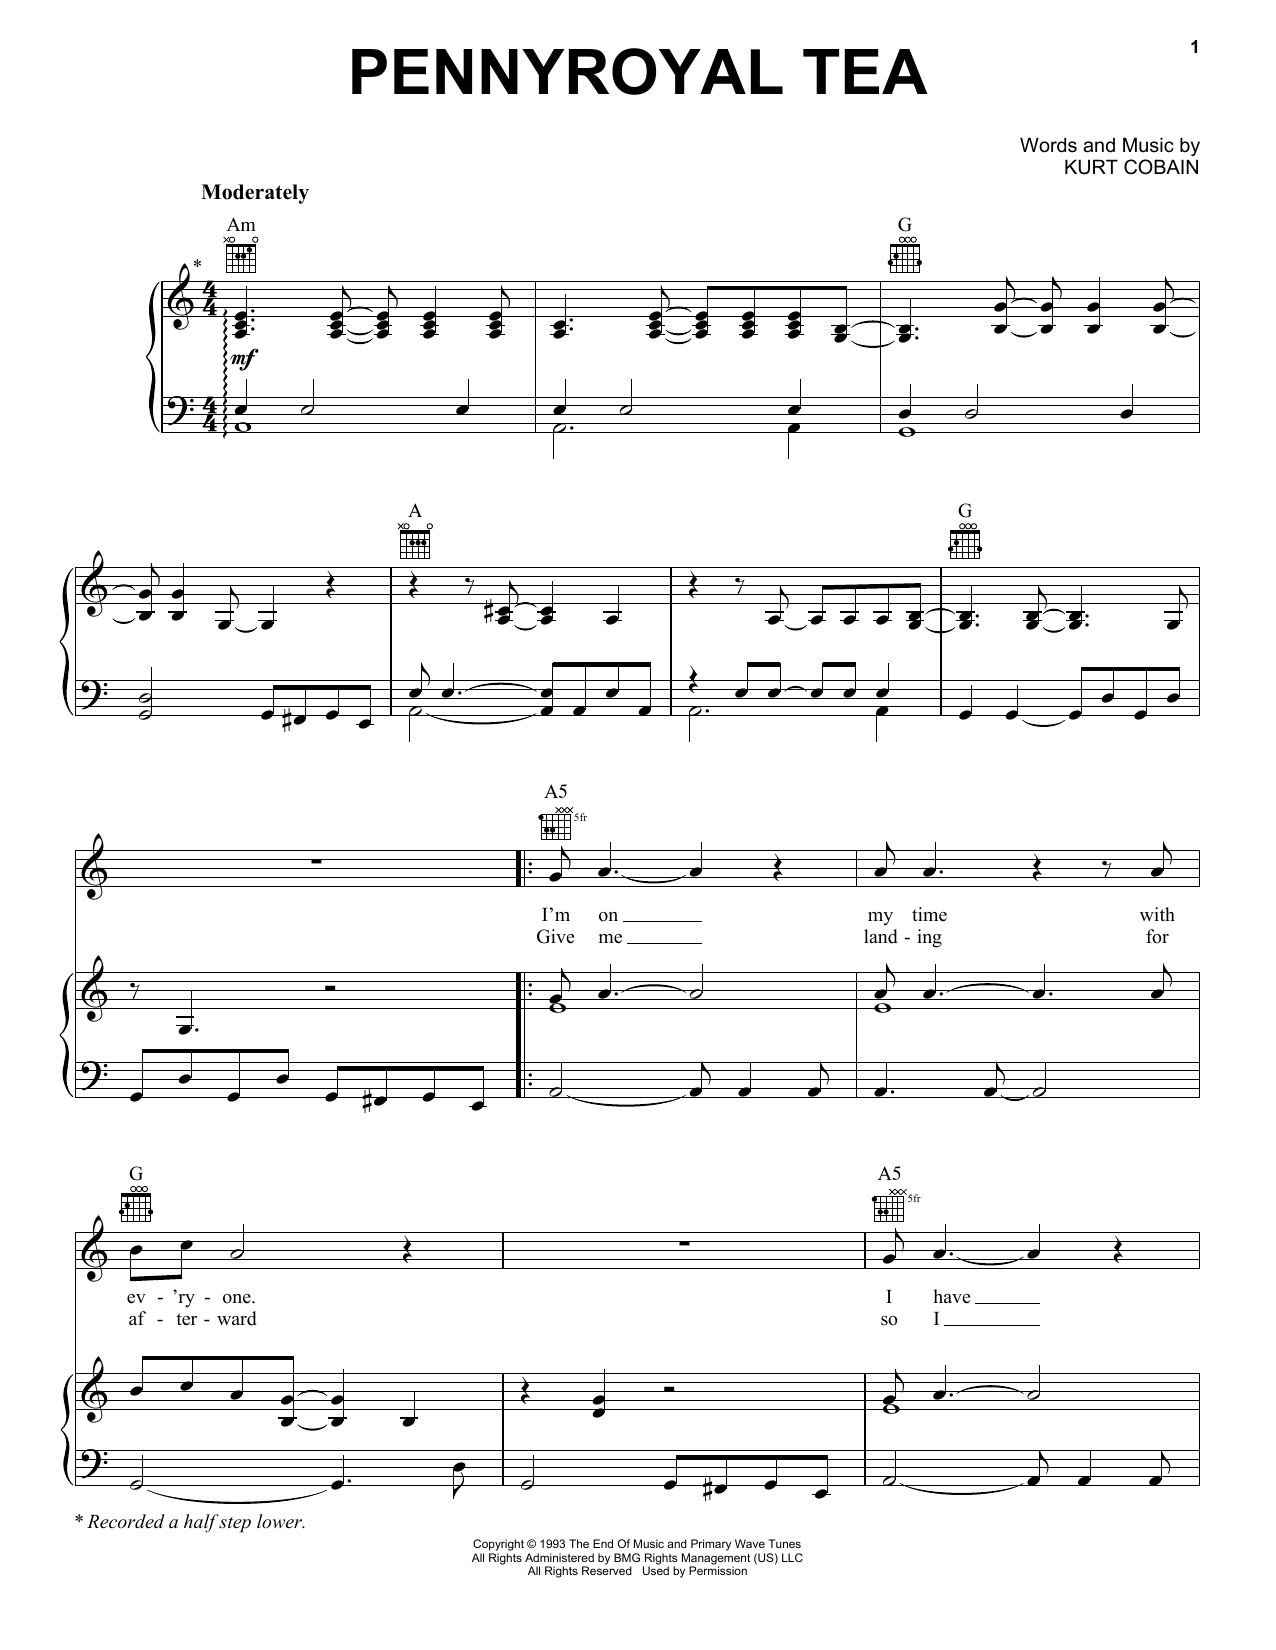 Nirvana Pennyroyal Tea Sheet Music Notes & Chords for Bass Guitar Tab - Download or Print PDF